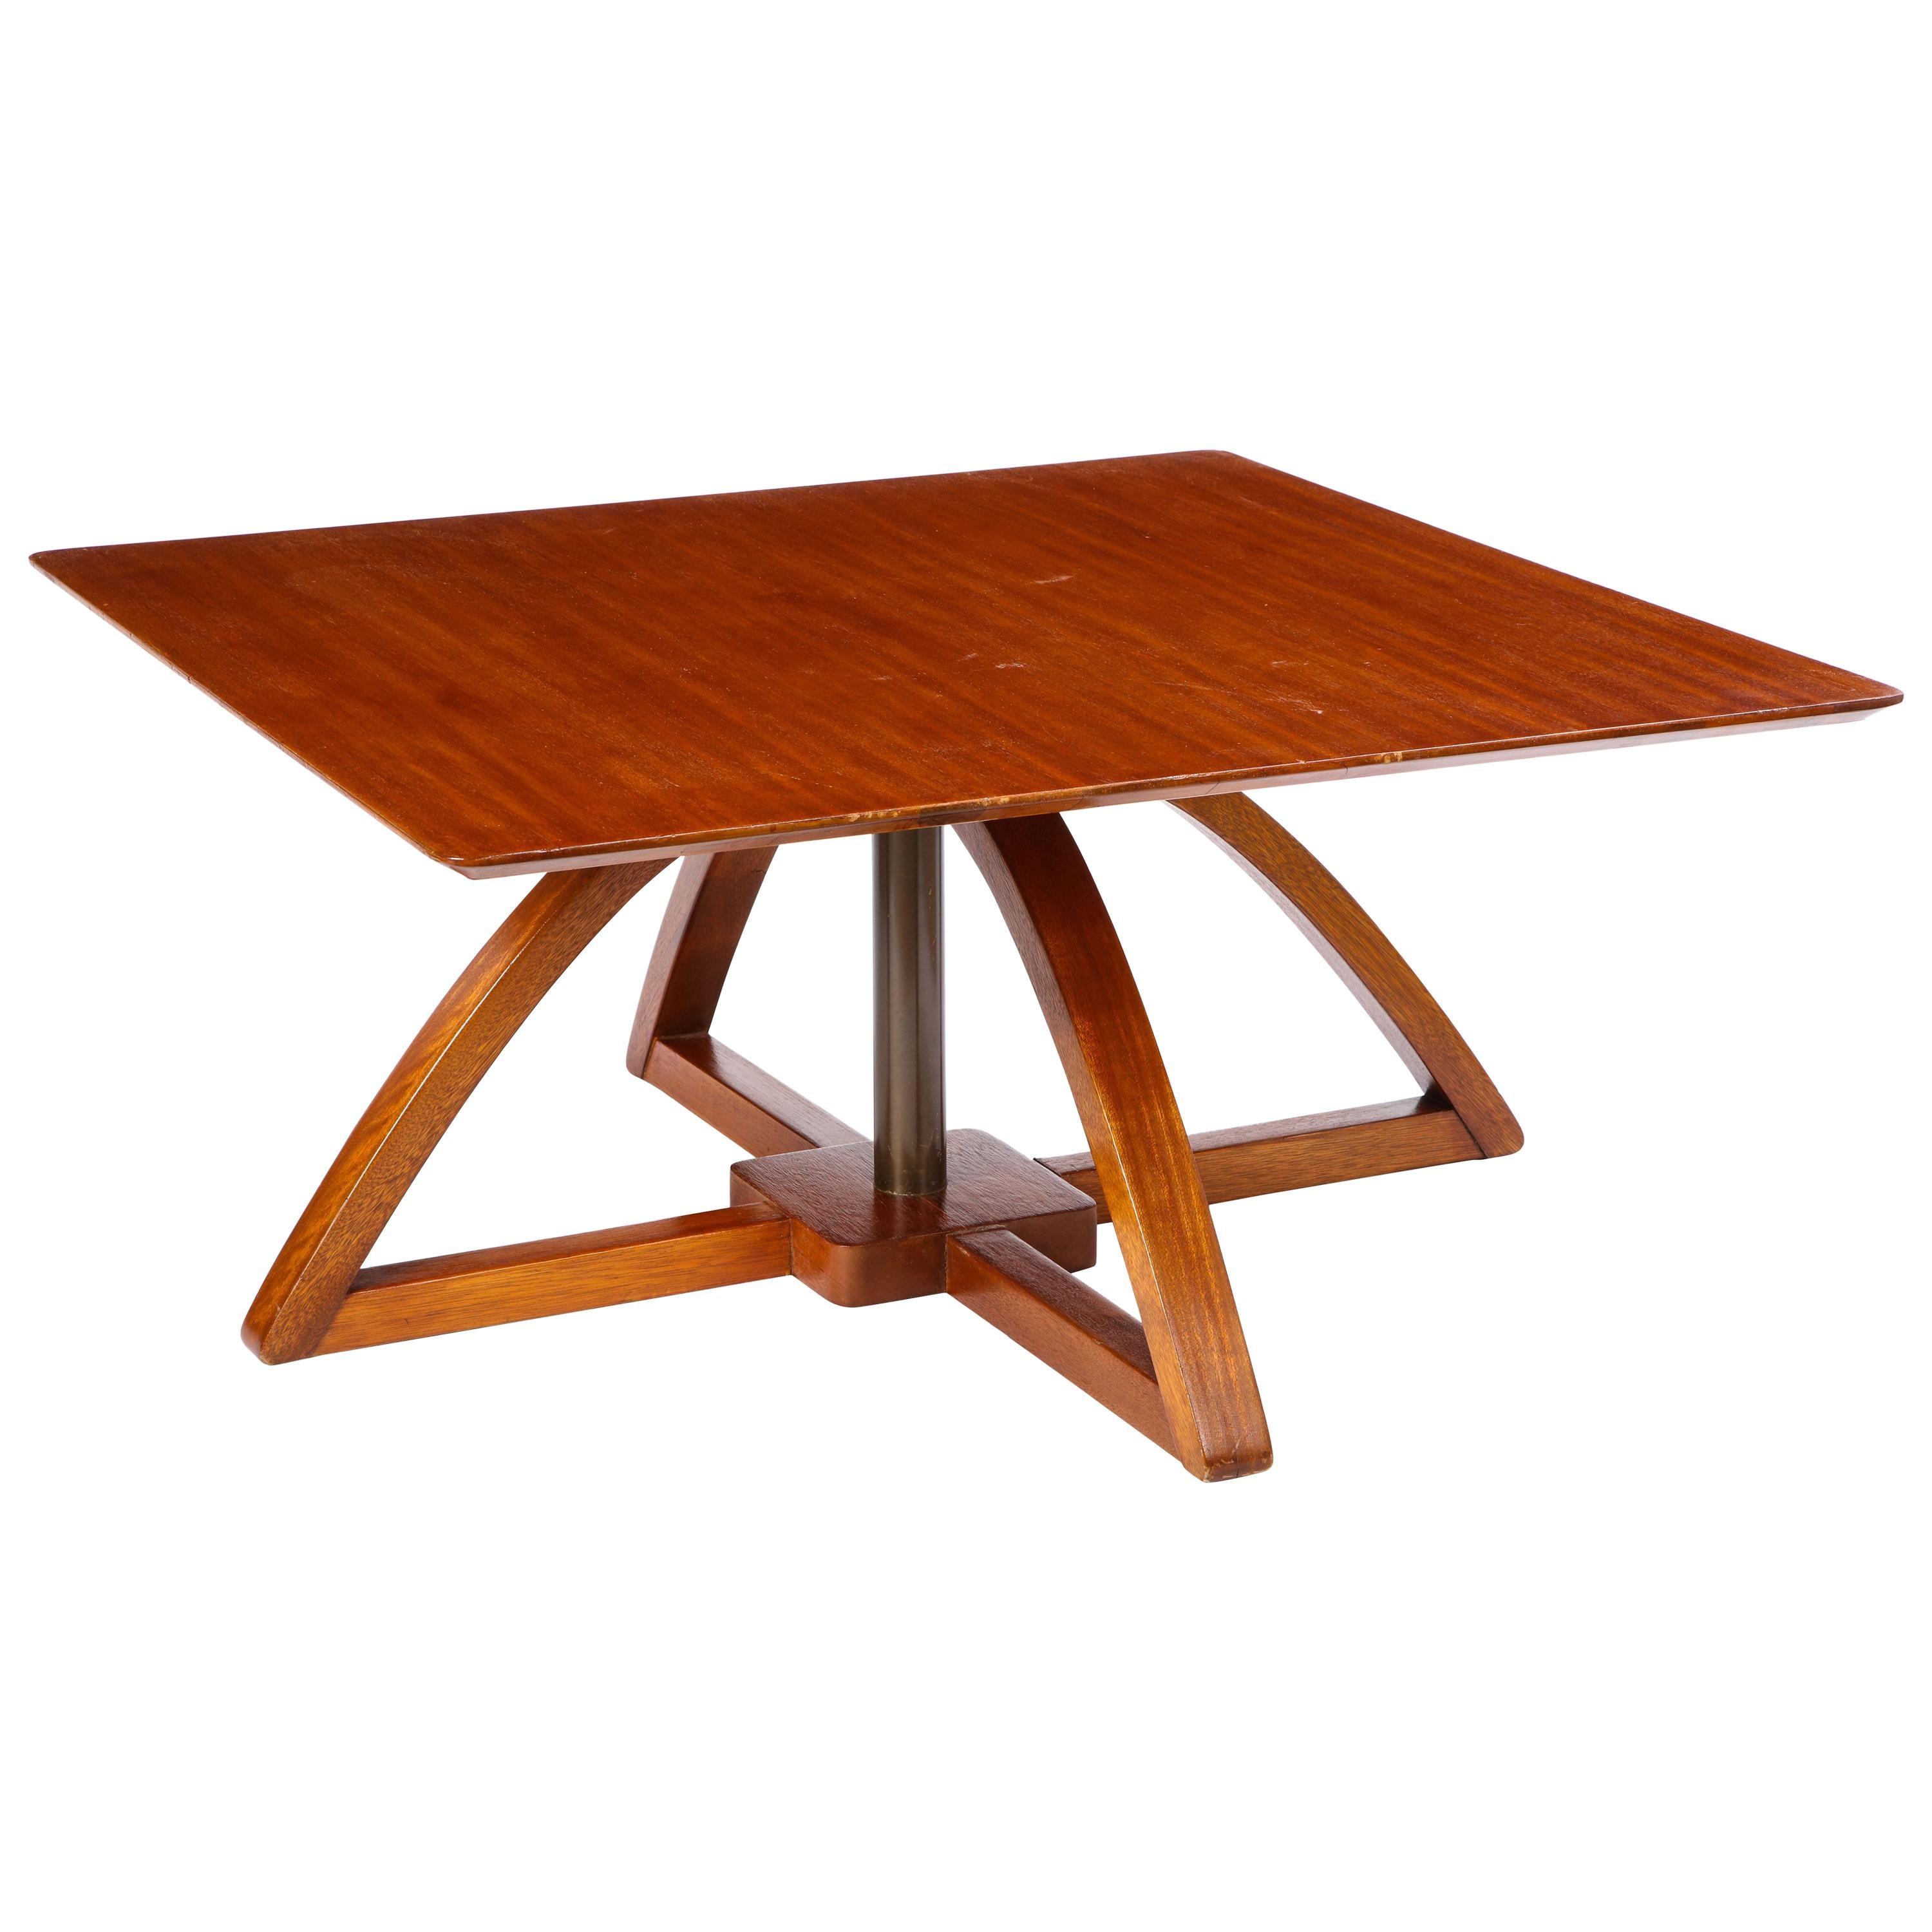 Verstellbarer quadratischer niedriger Mahagoni-Tisch, modern